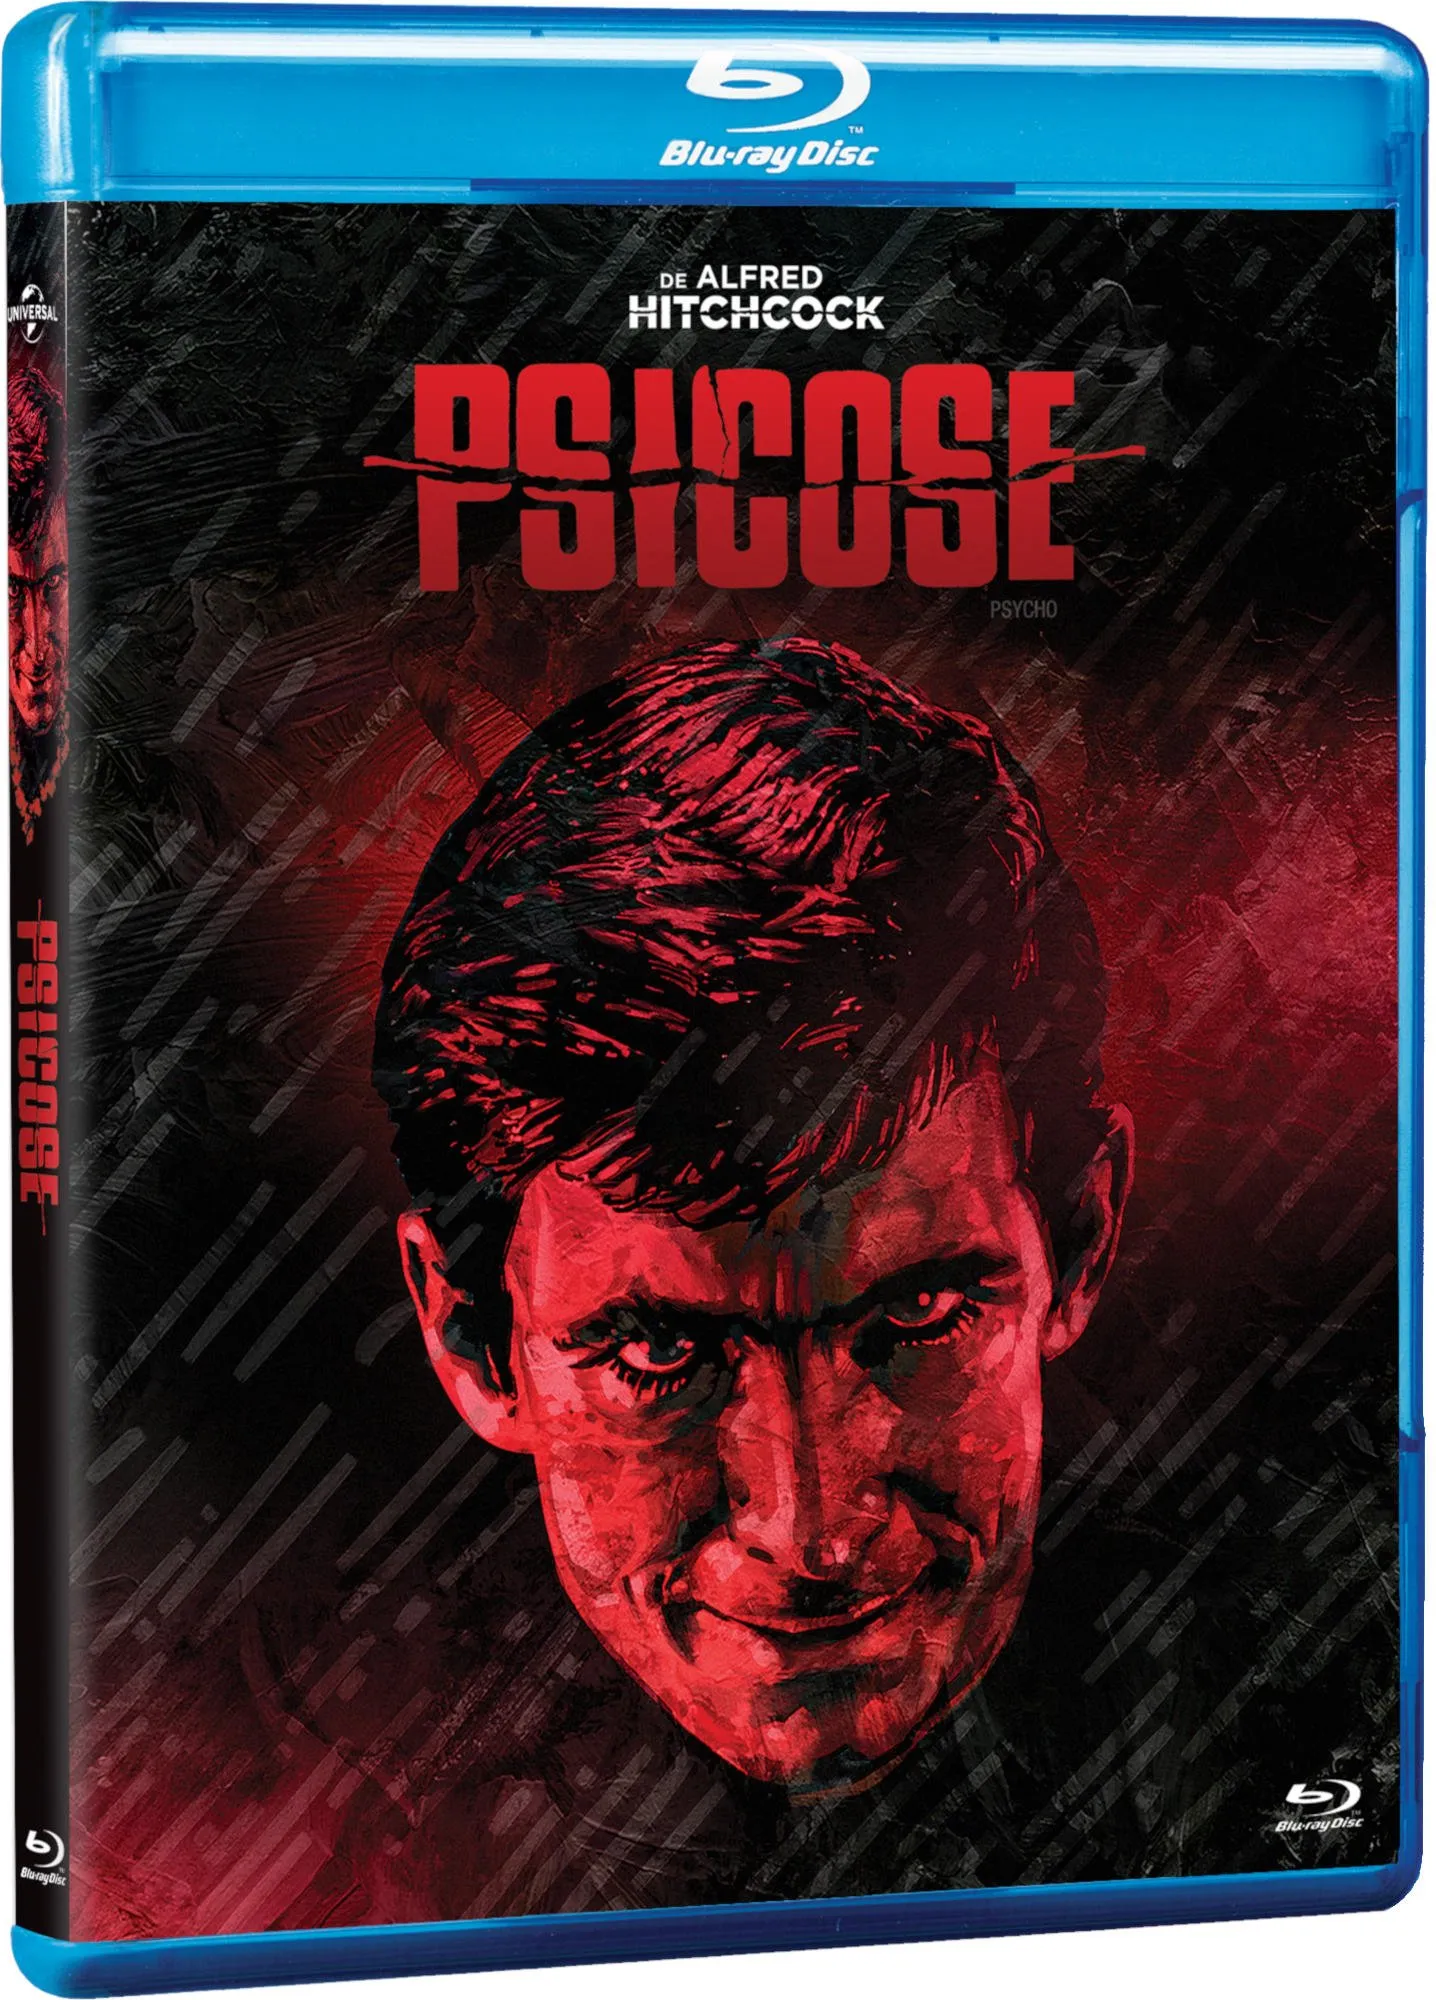 PSICOSE (VERSÃO ESTENDIDA) - Blu-ray